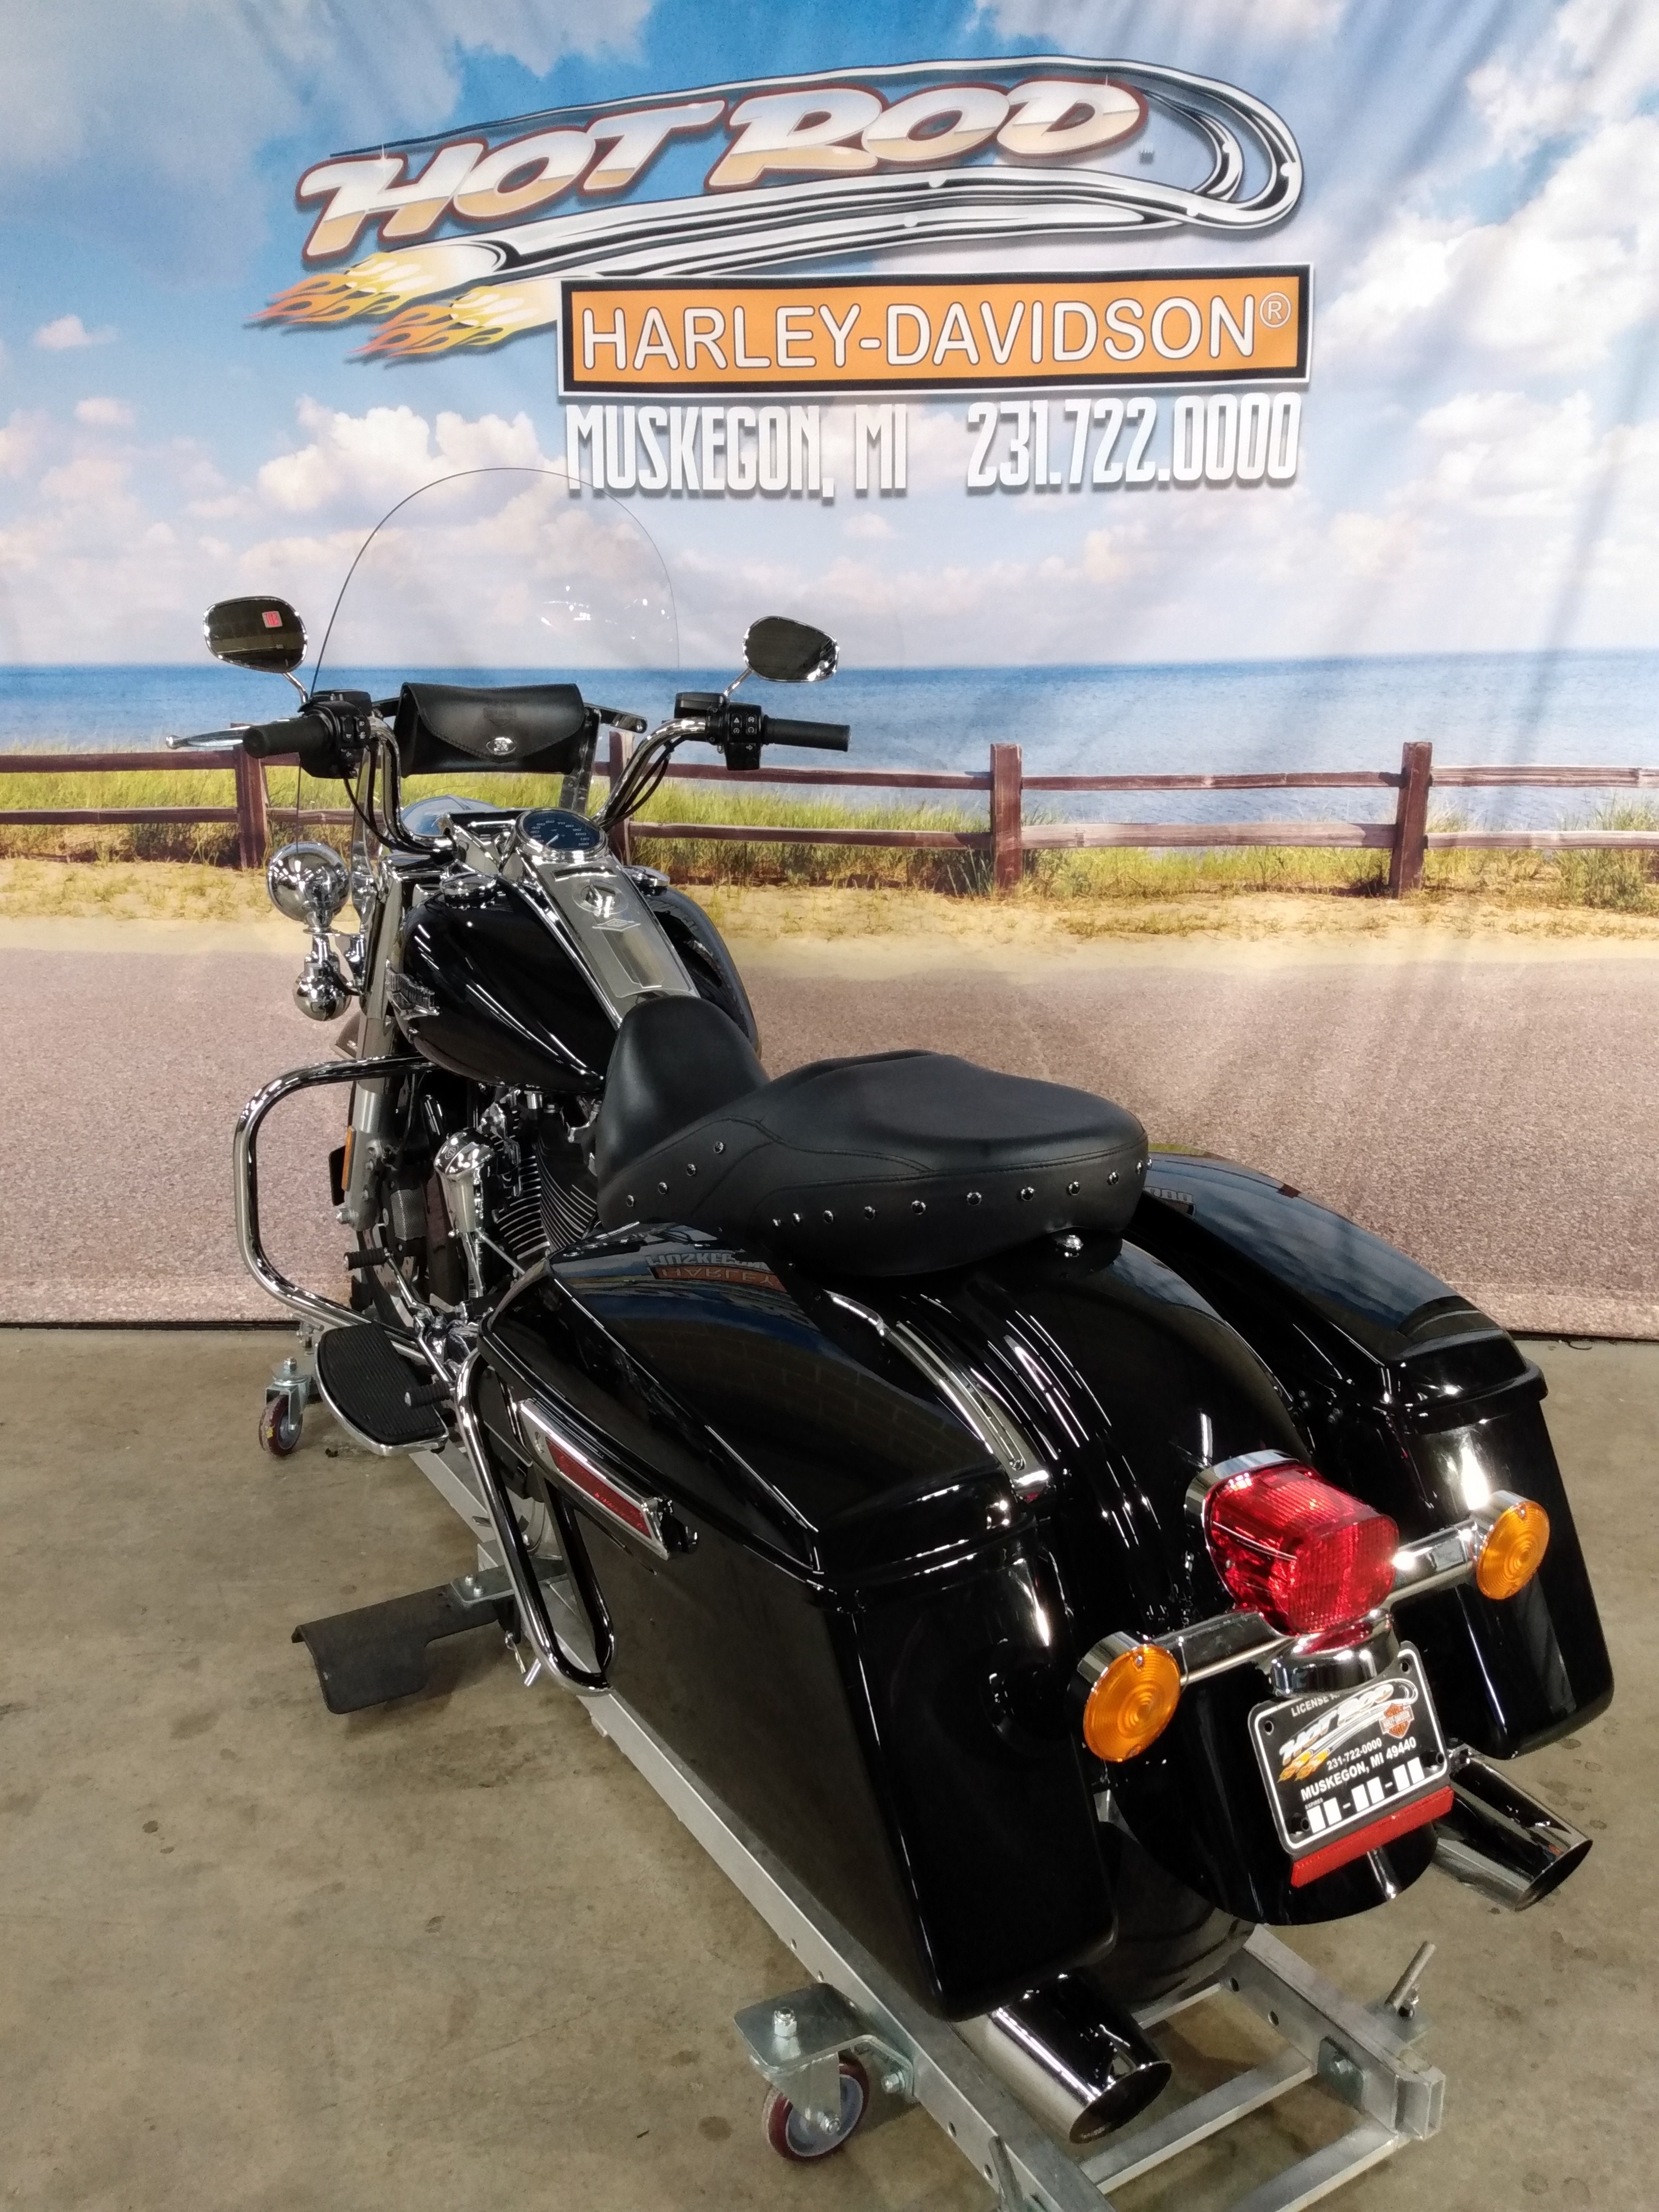 2018 Harley-Davidson Road King Base at Hot Rod Harley-Davidson